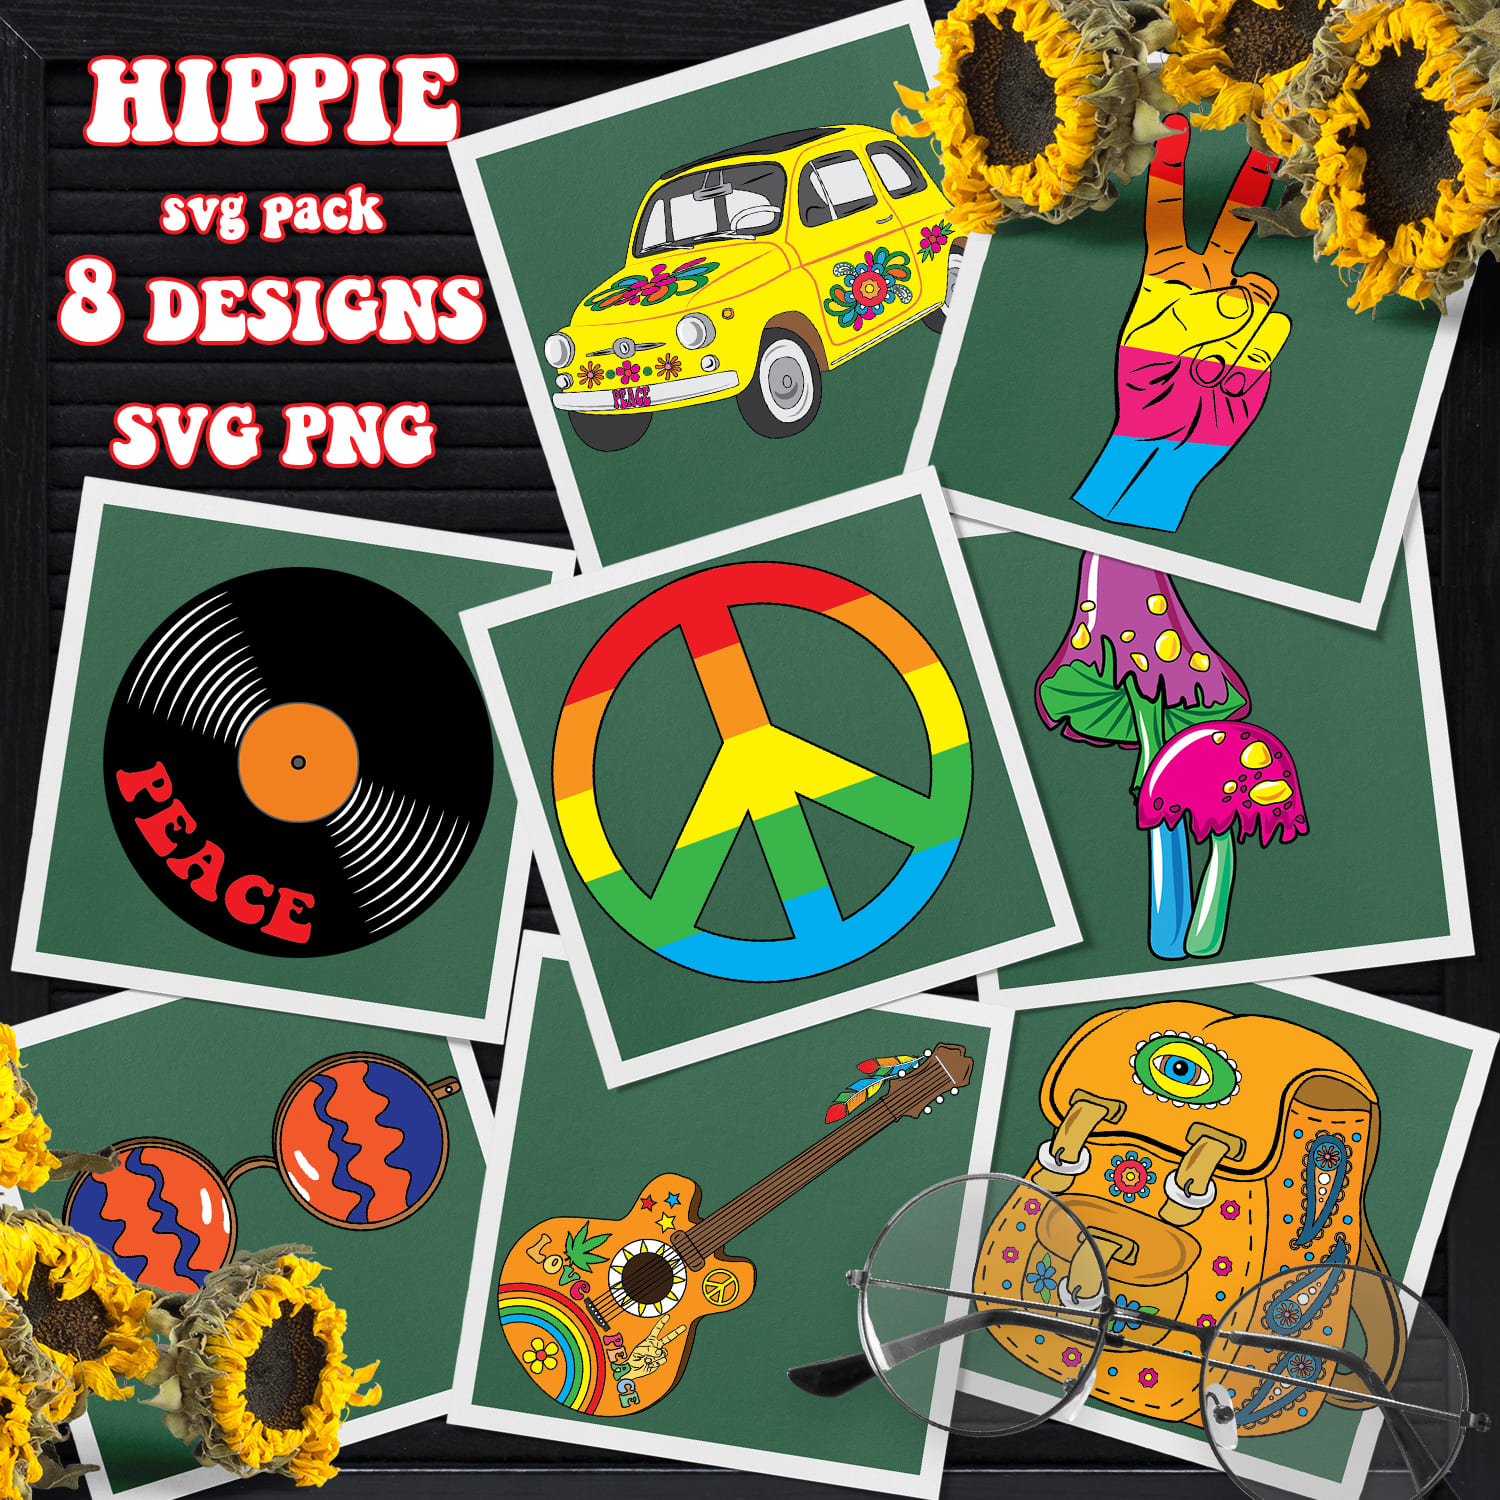 Hippie SVG design - main image preview.